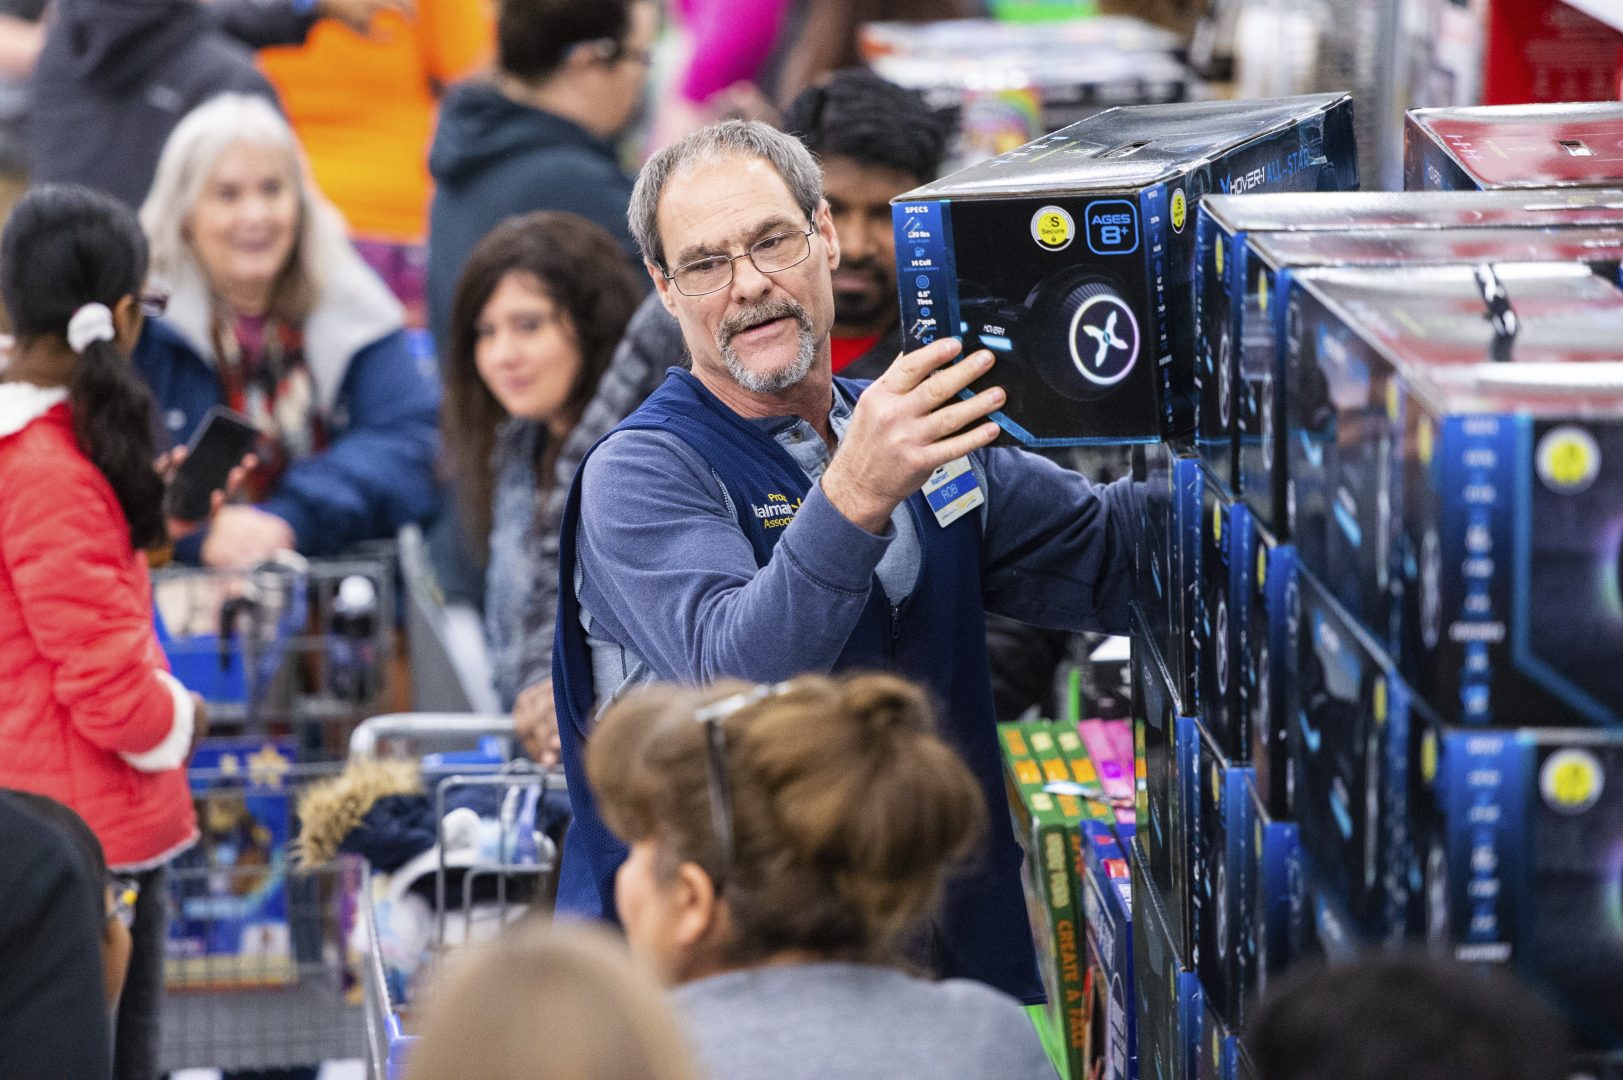 IMAGE DISTRIBUTED FOR WALMART - Walmart associate helps customers shop Black Friday deals at the retailer's store event, on Thursday Nov. 28, in Bentonville, Ark. (Gunnar Rathbun/AP Images for Walmart)